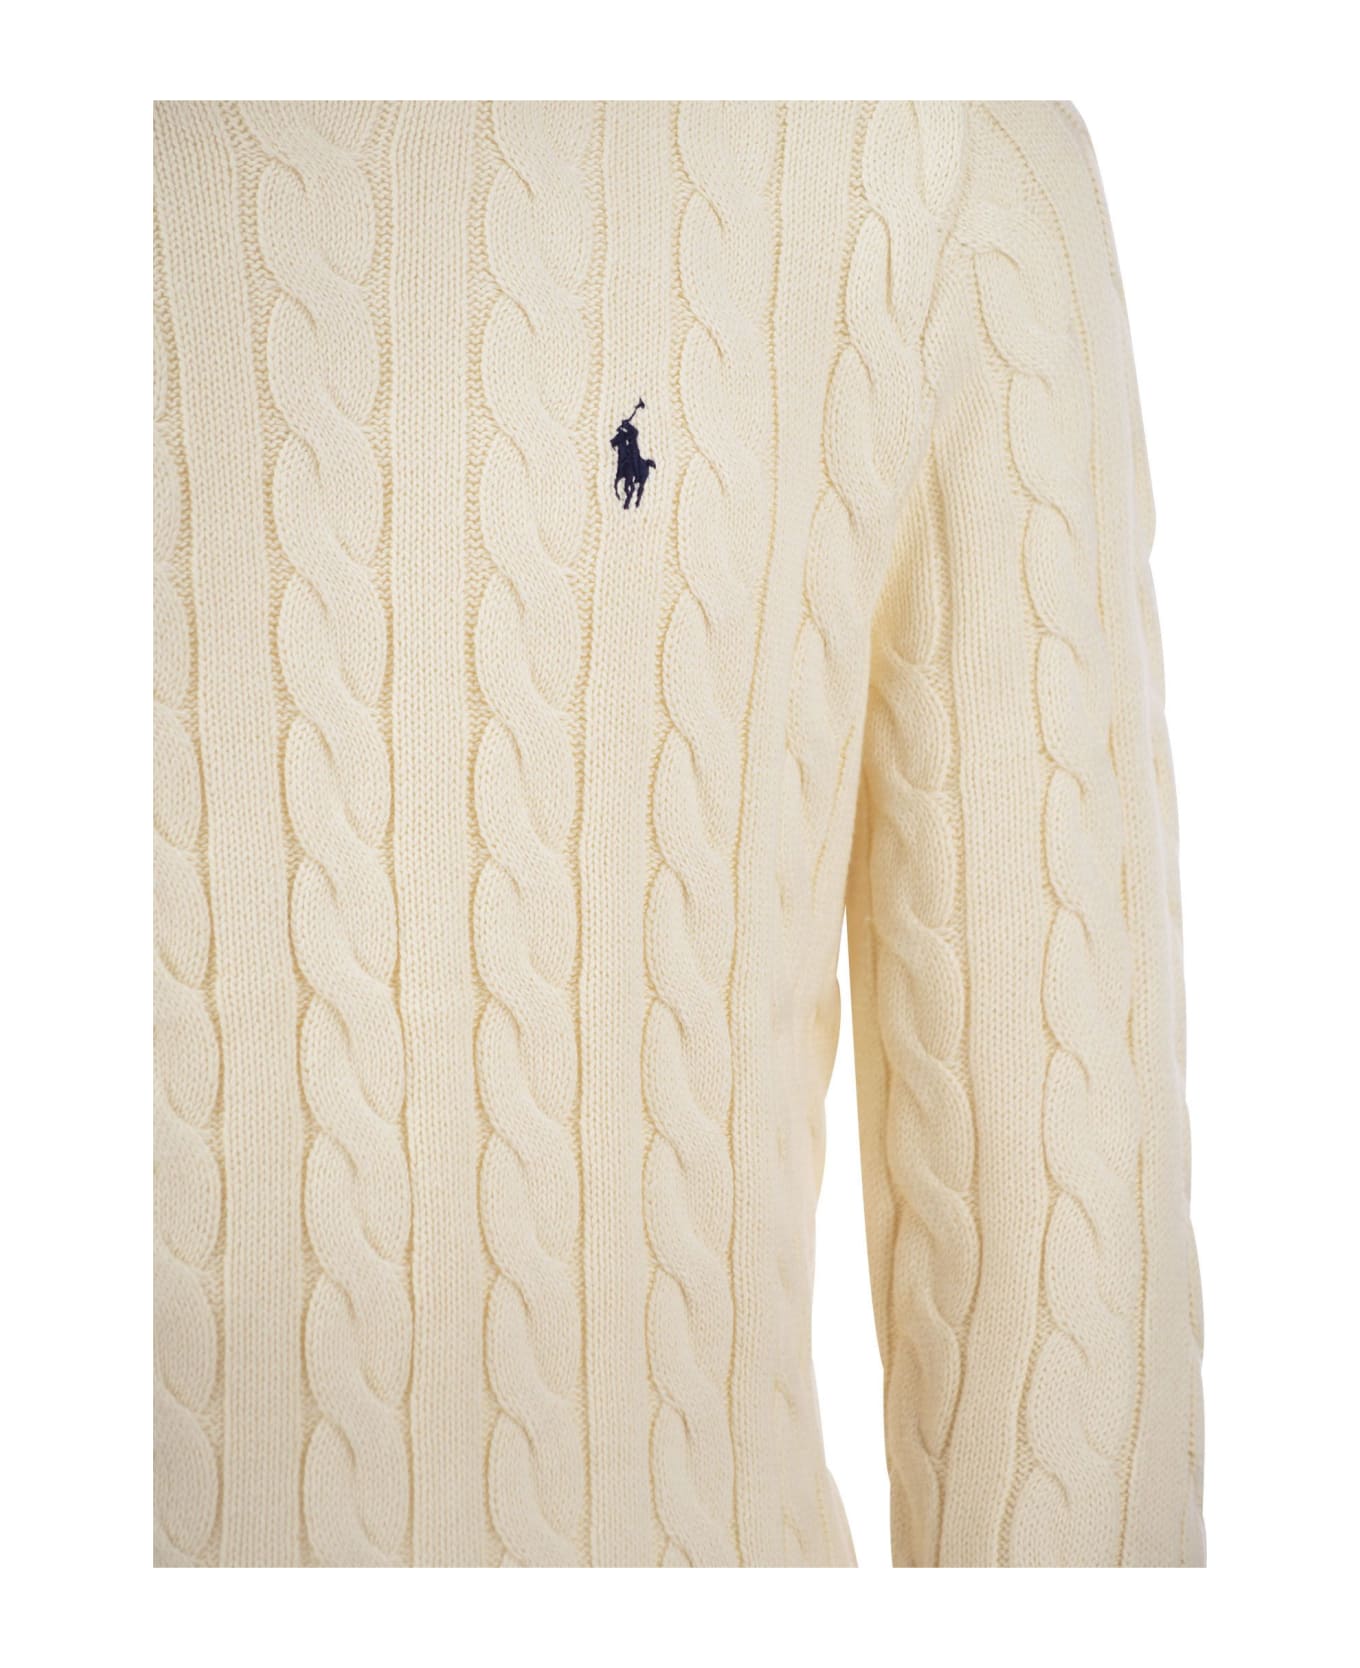 Polo Ralph Lauren Plaited Cotton Jersey - Cream ニットウェア